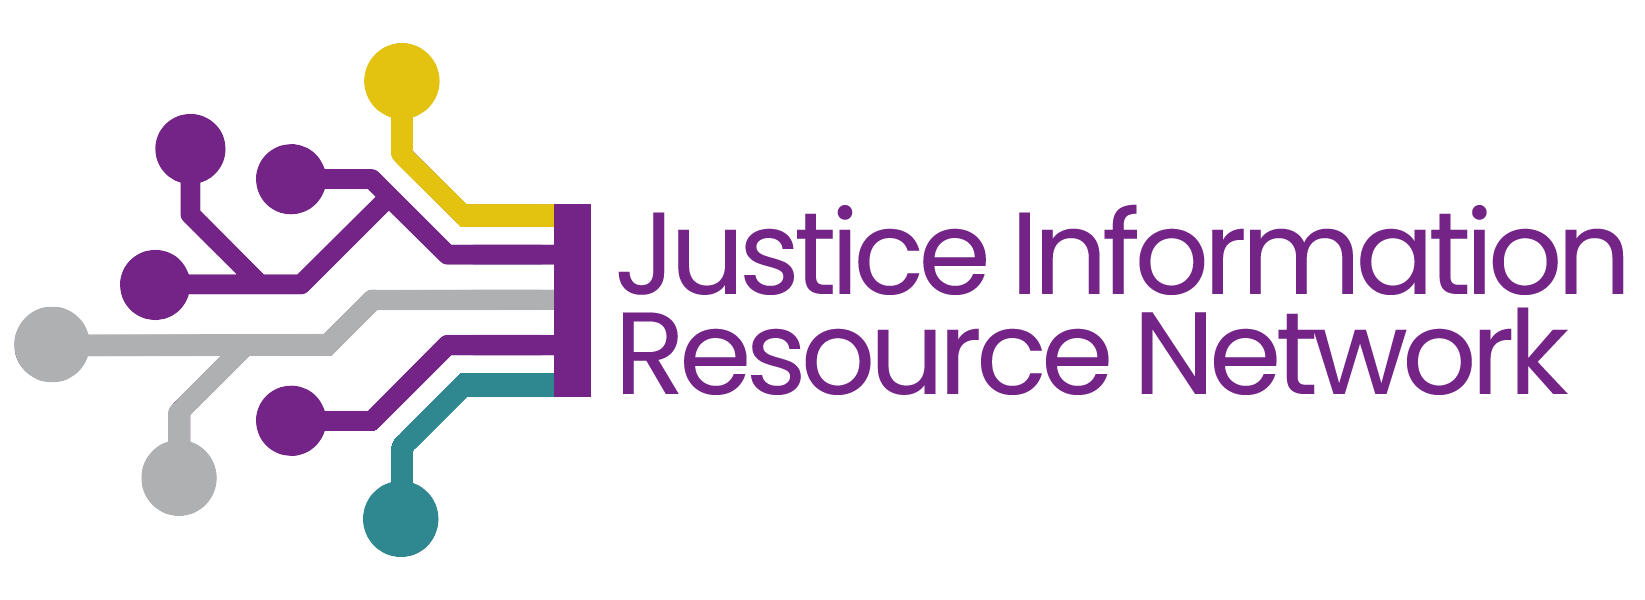 Justice Information Resource Network Logo